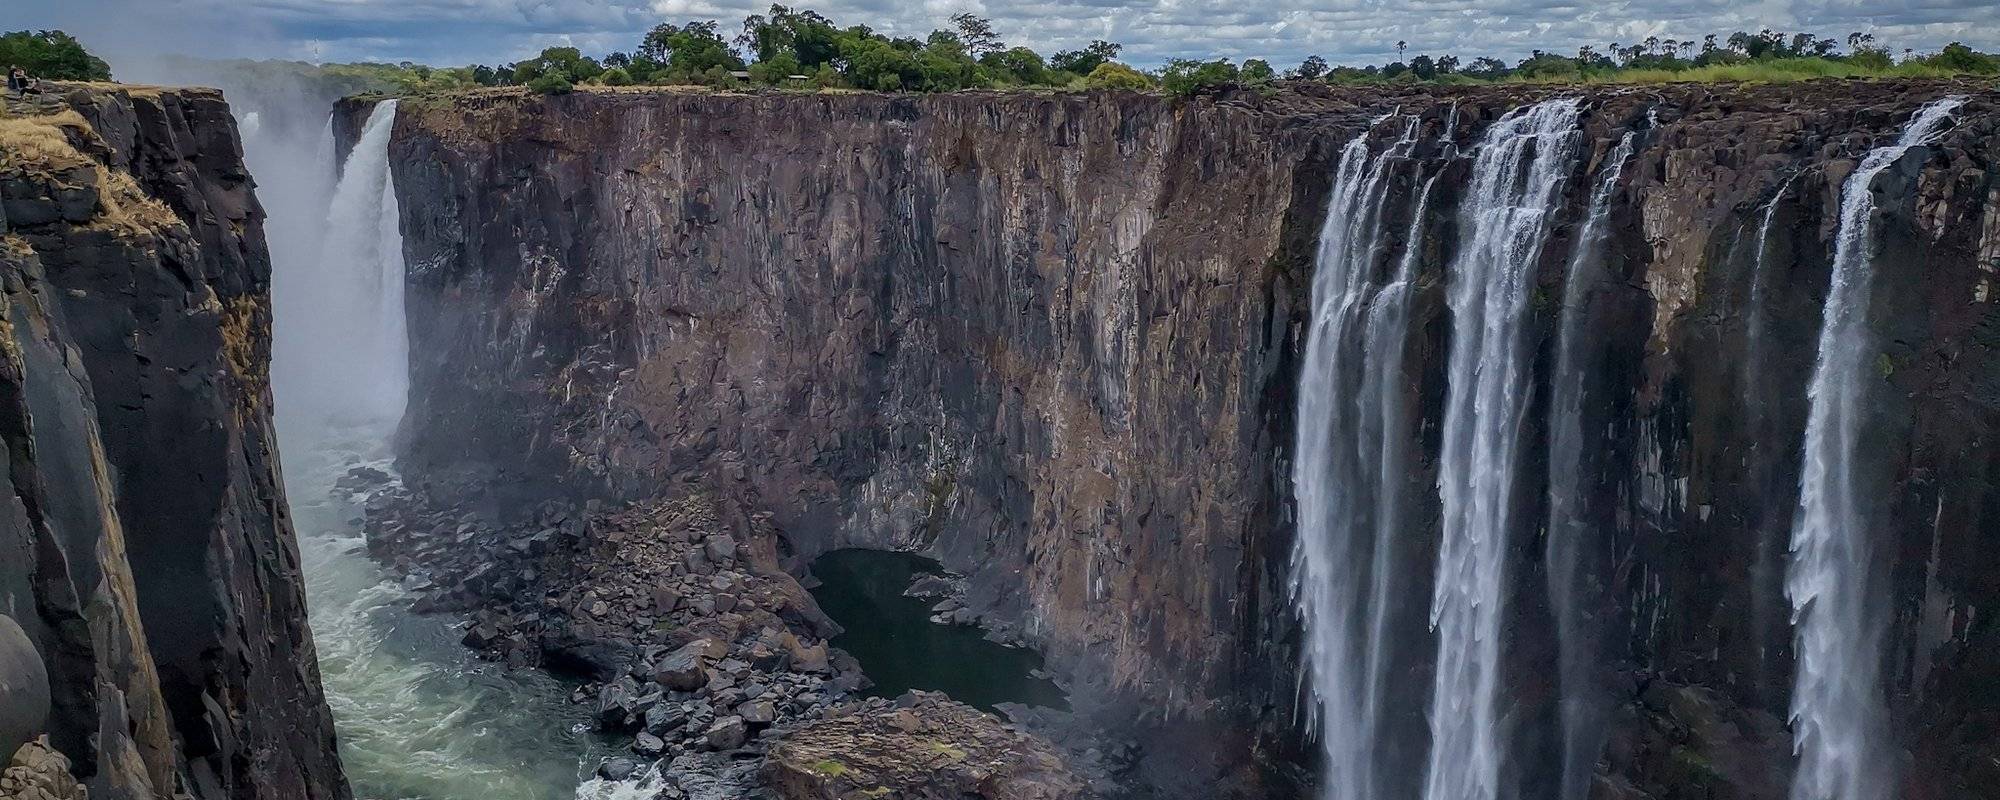 Victoria Falls - Zimbabwe, African Adventure